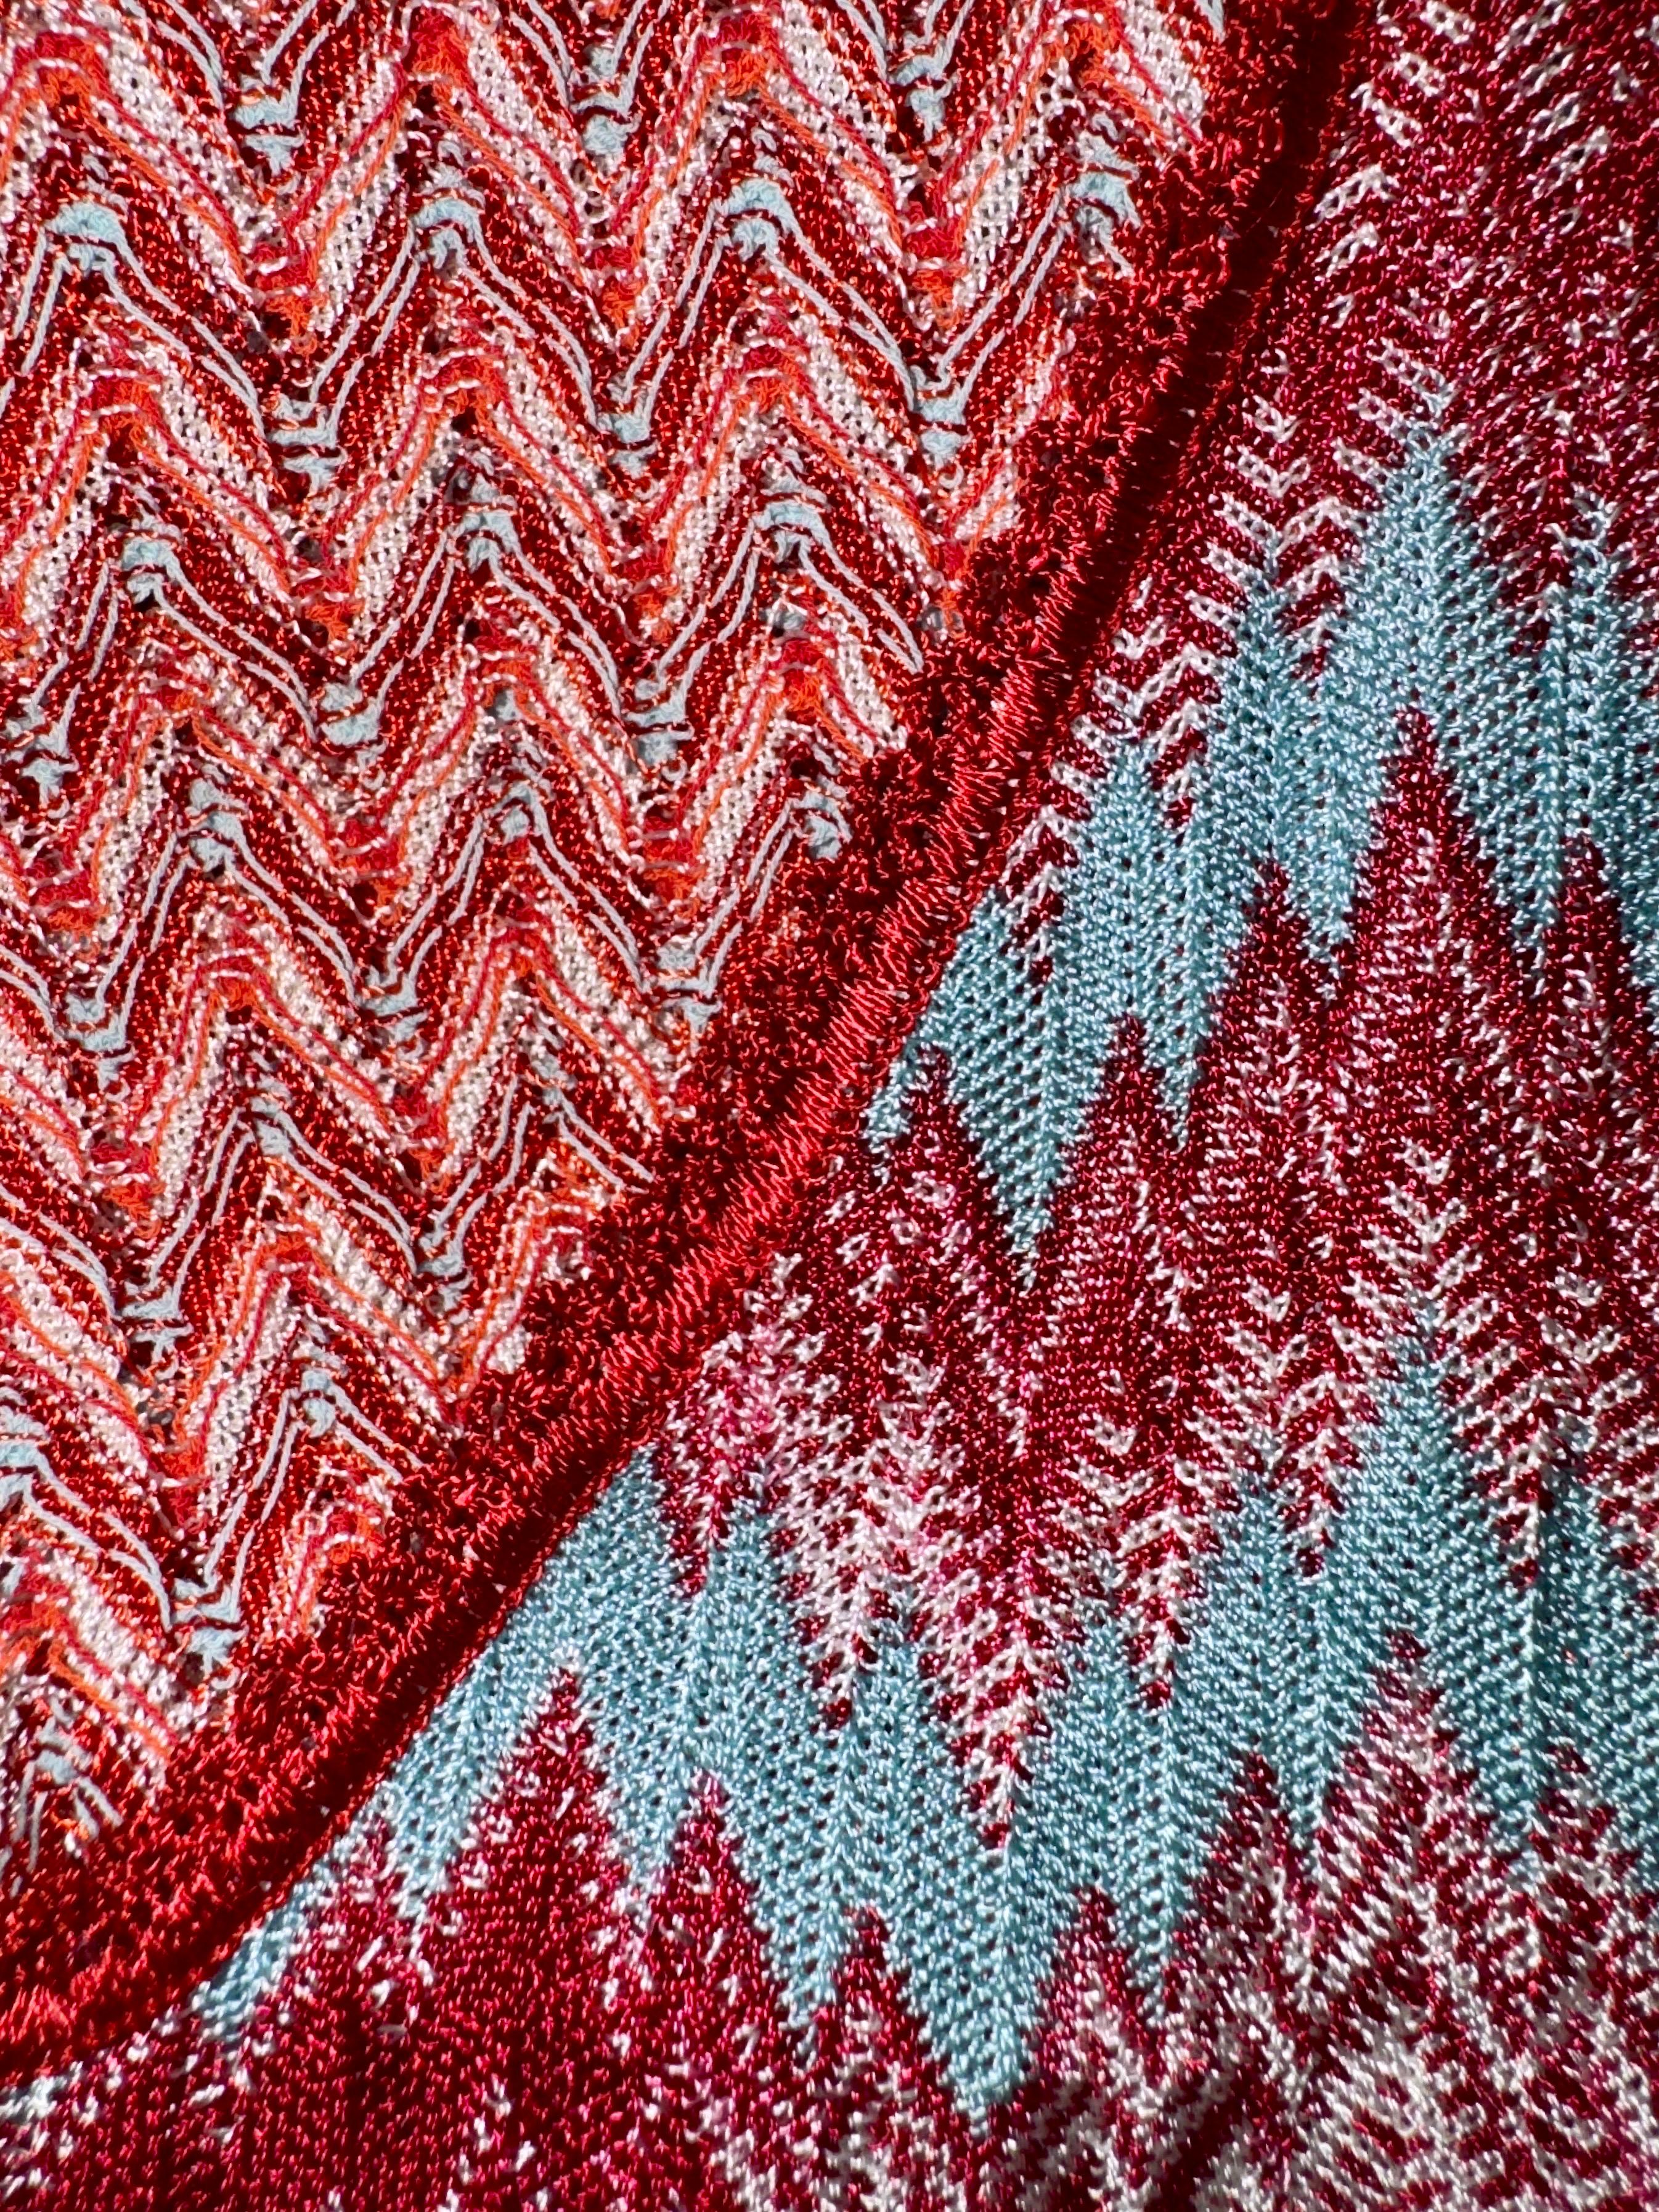 Women's UNWORN Missoni Signature Crochet Knit Chevron Tunic Top Dress 40